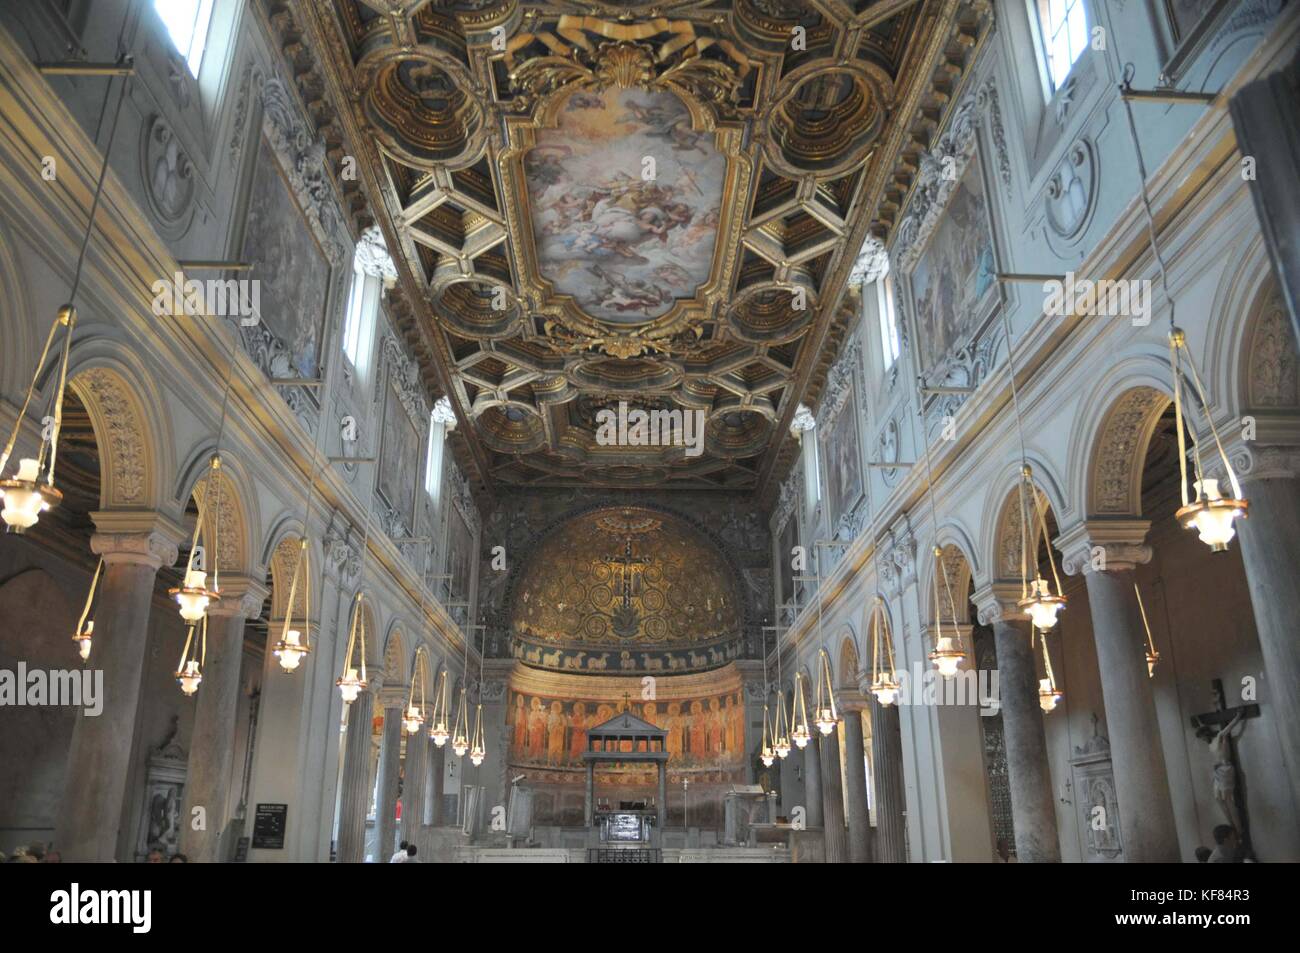 Apse mosaic and ceiling inside the basilica of San Clemente al Laterano, Rome, Italy    Credit © Fabio Mazzarella/Sintesi/Alamy Stock Photo Stock Photo